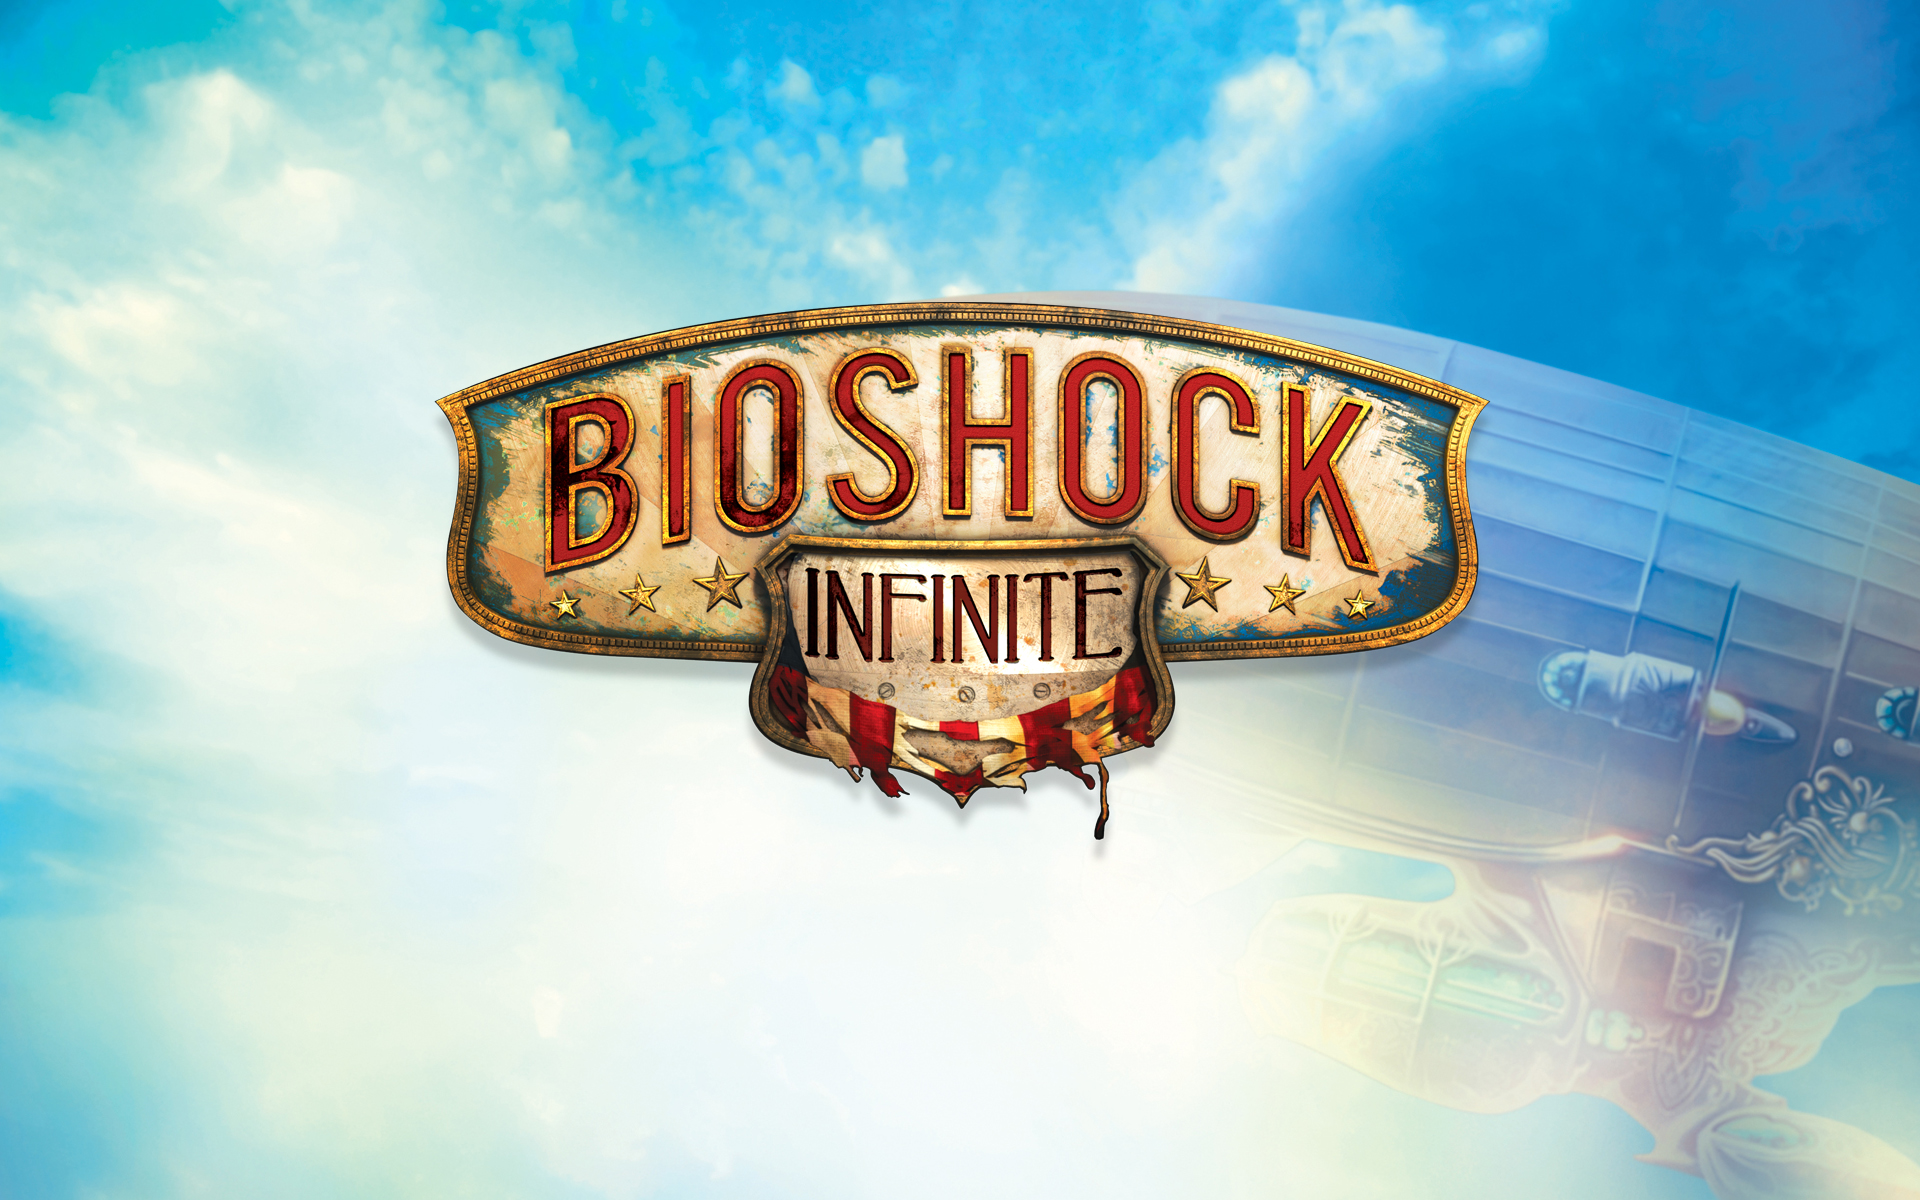 Elizabeth Bioshock Infinite HD Wallpaper Points